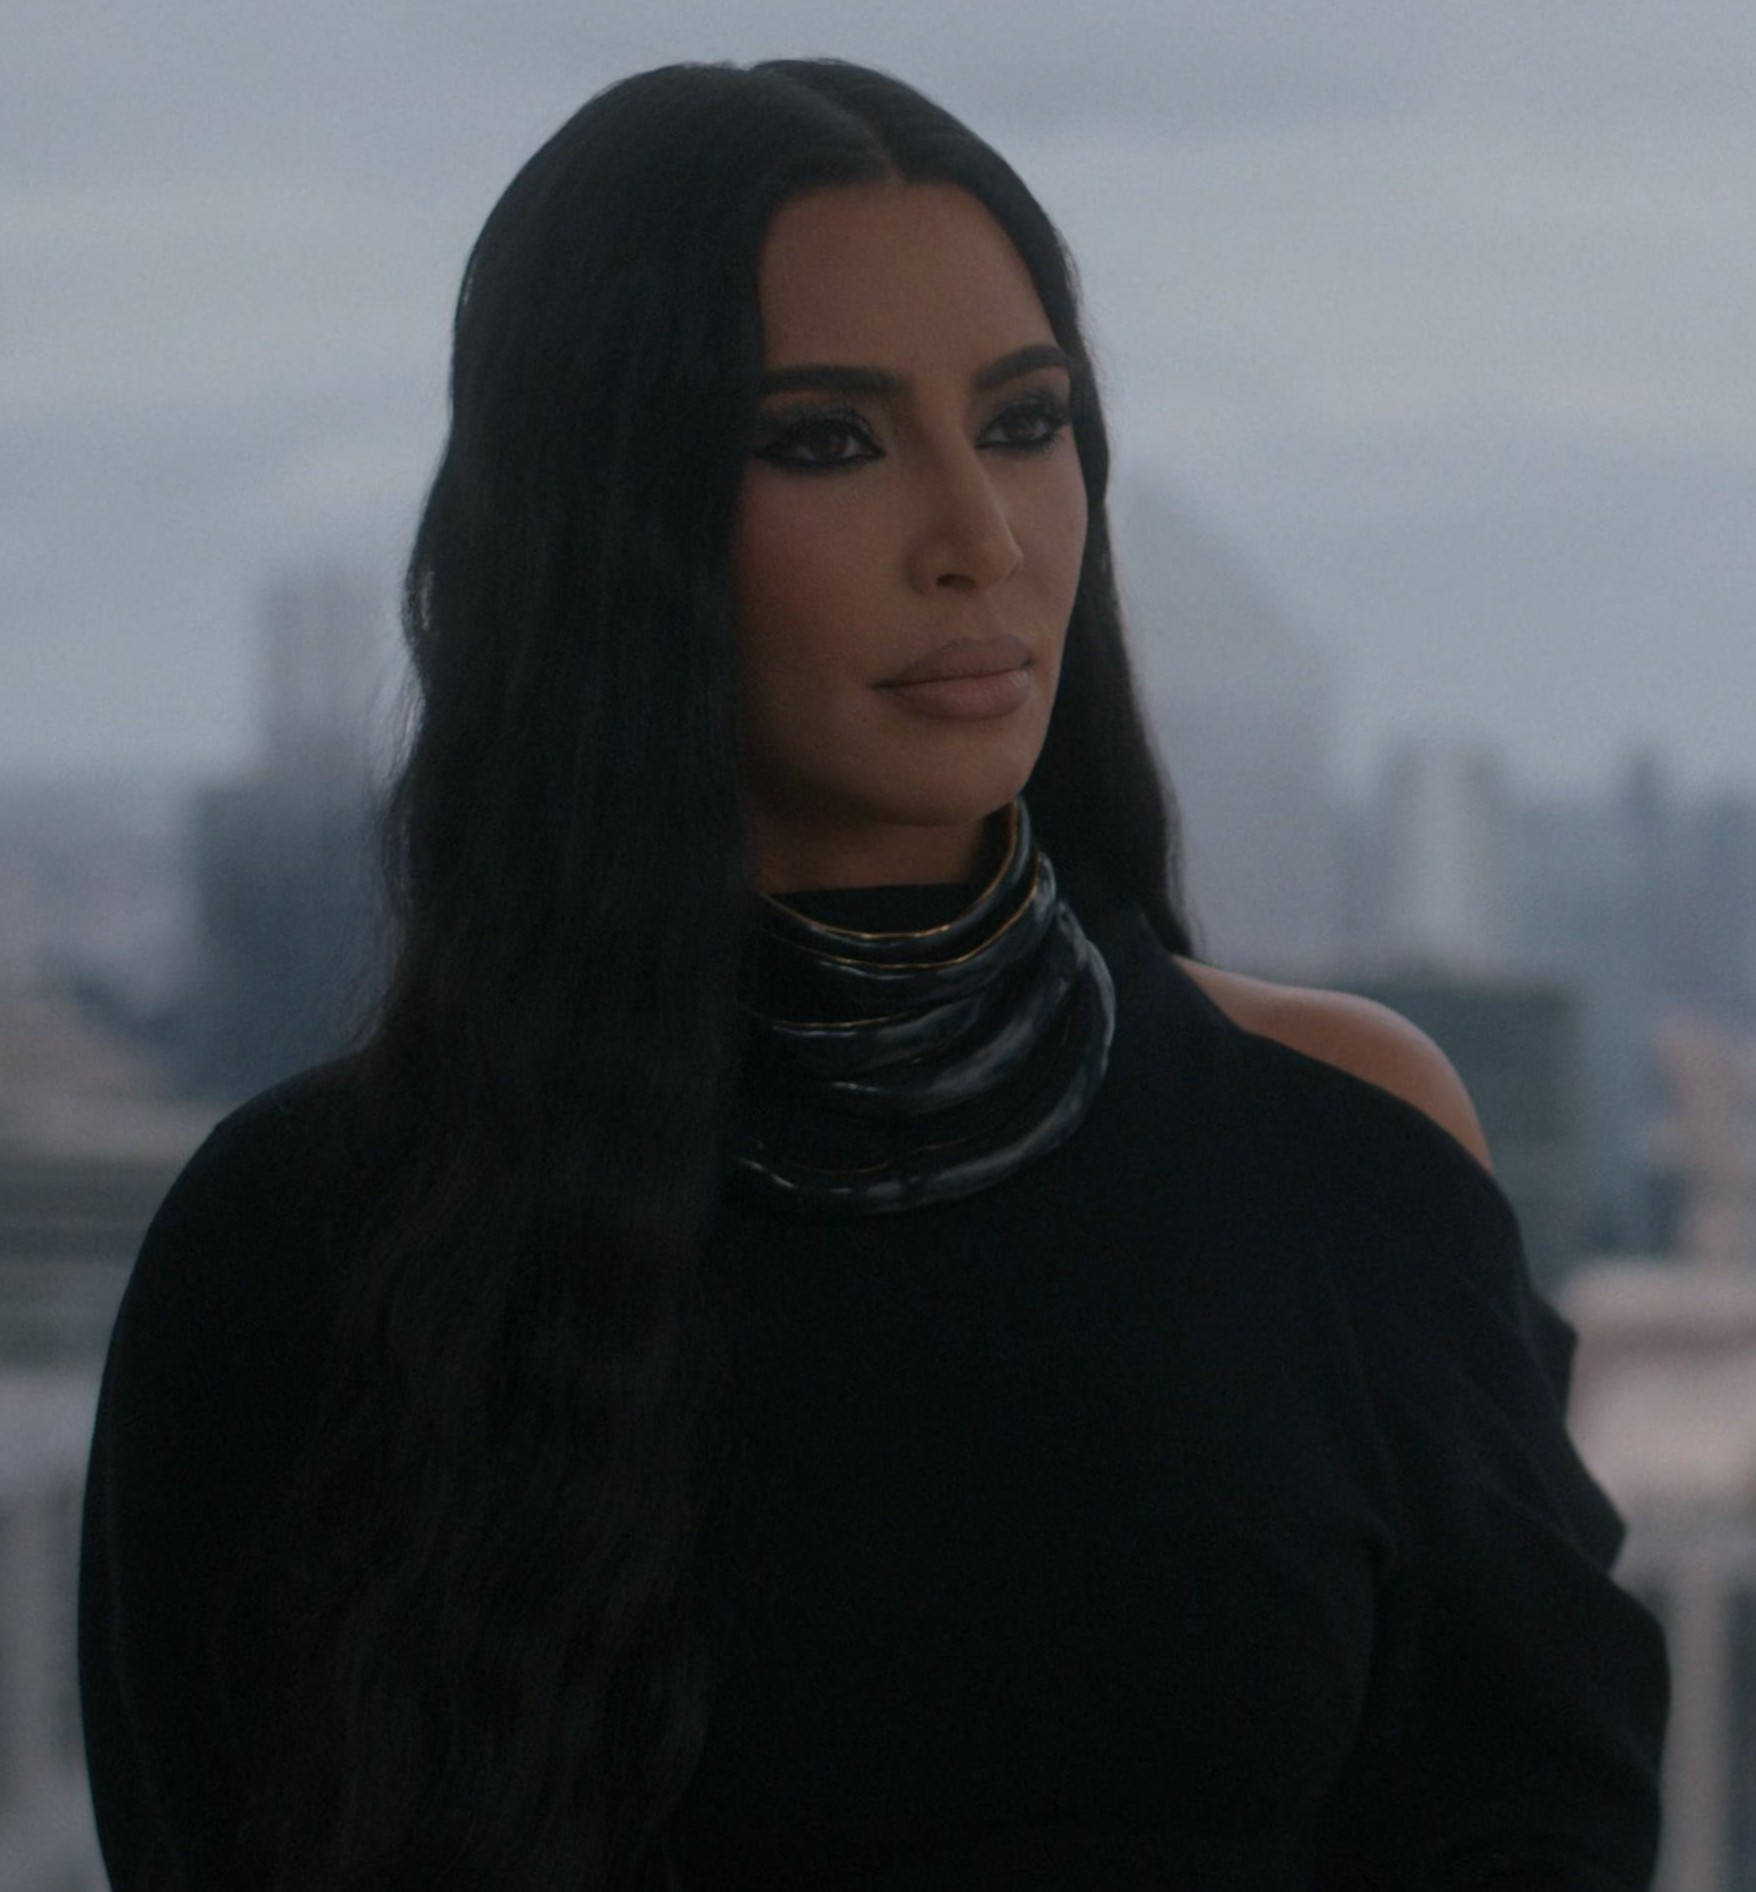 Worn on American Horror Story TV Show - Black Layered Necklace of Kim Kardashian as Siobhan Walsh